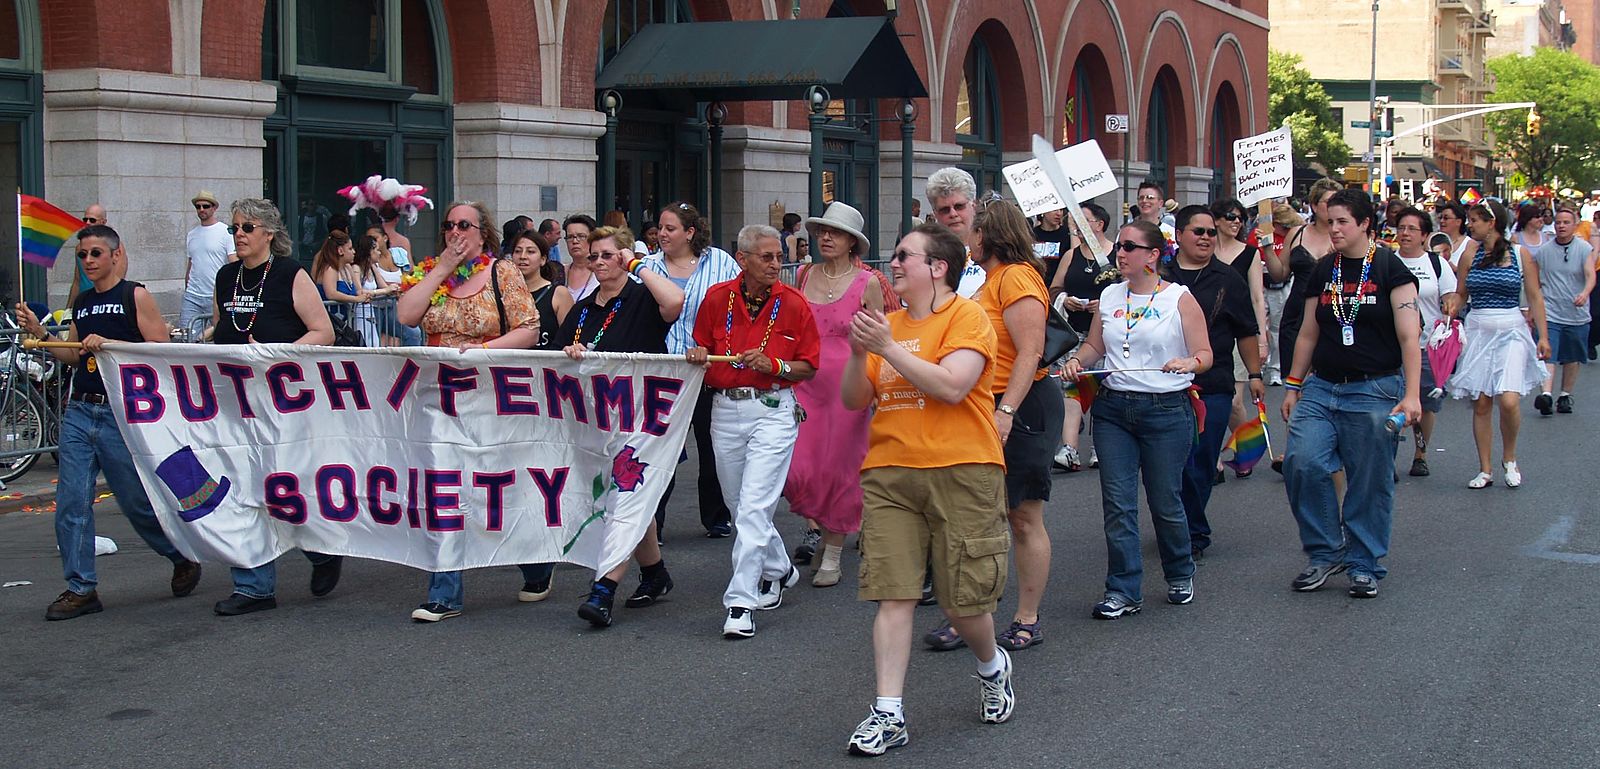 Butch Femme Society, 2007, by David Shankbone, Wikimedia Commons